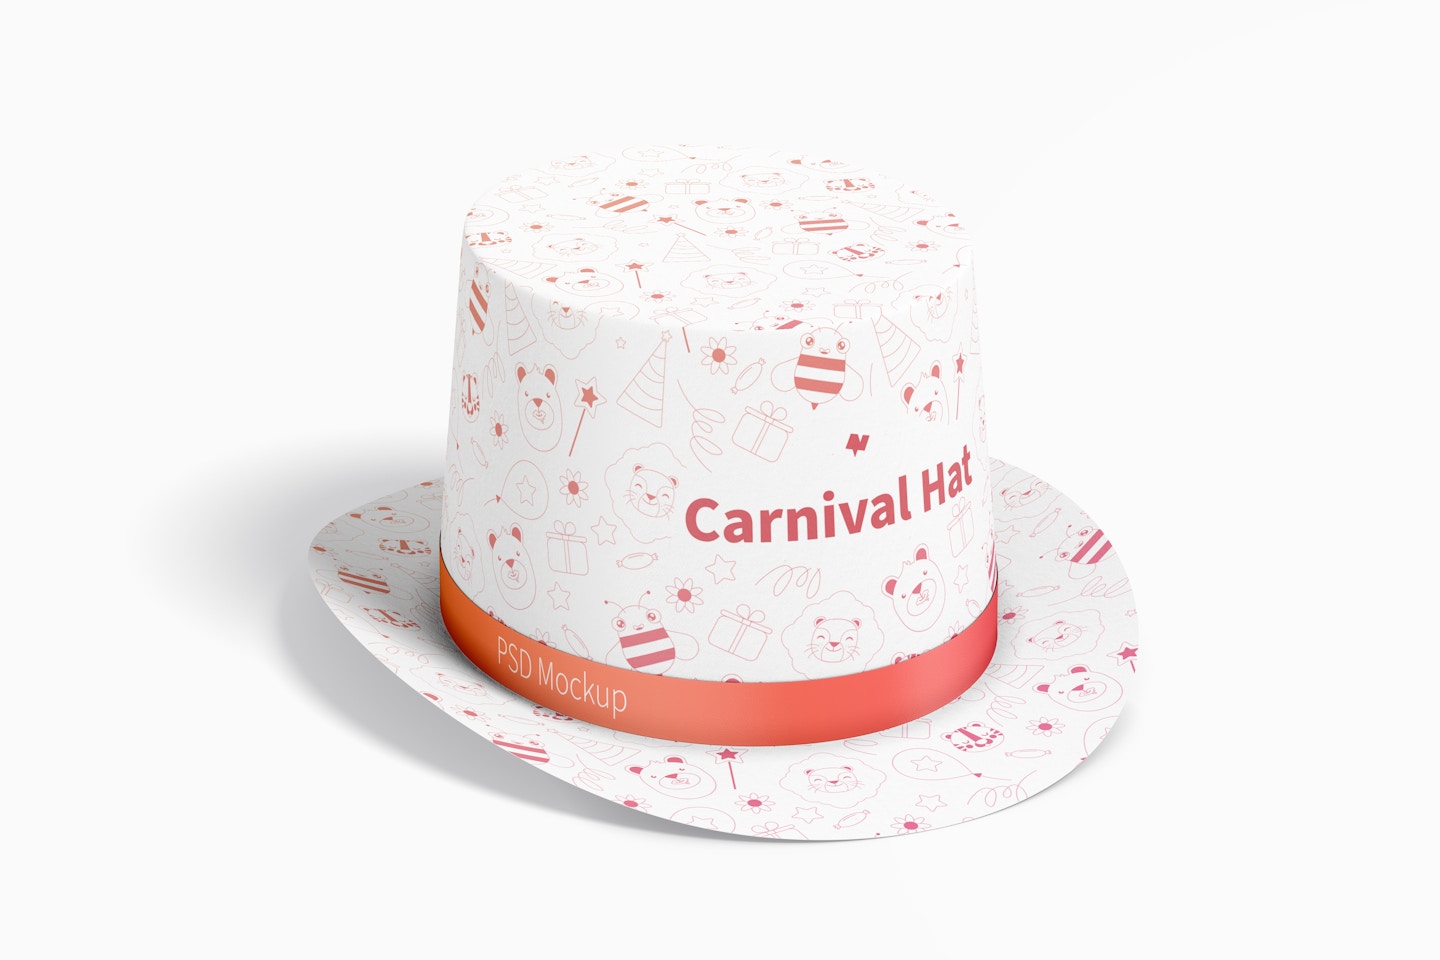 Carnival Hat Mockup, Perspective